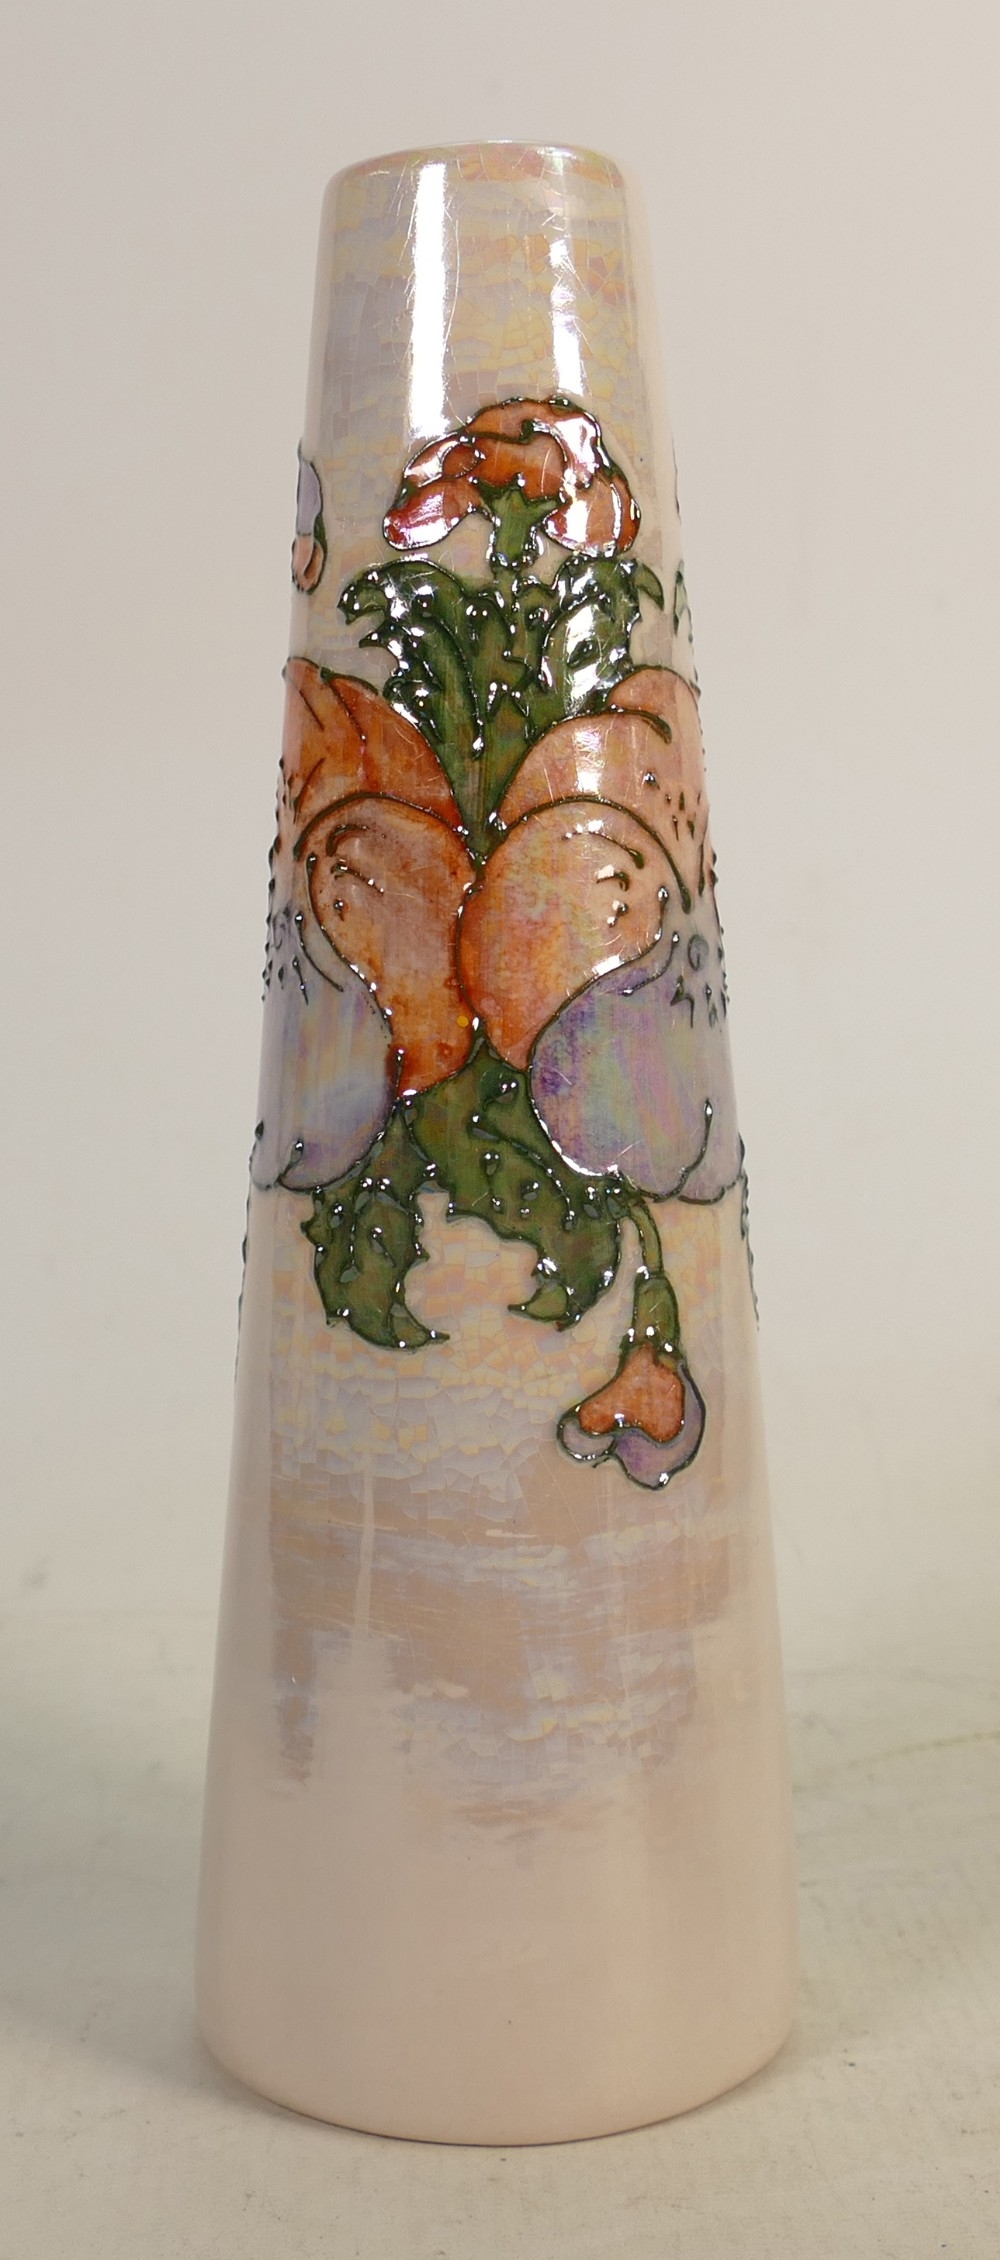 Lise B Moorcroft studio pottery vase Pansy design: Lustre glazed, signed and dated 2013. 25cm high.